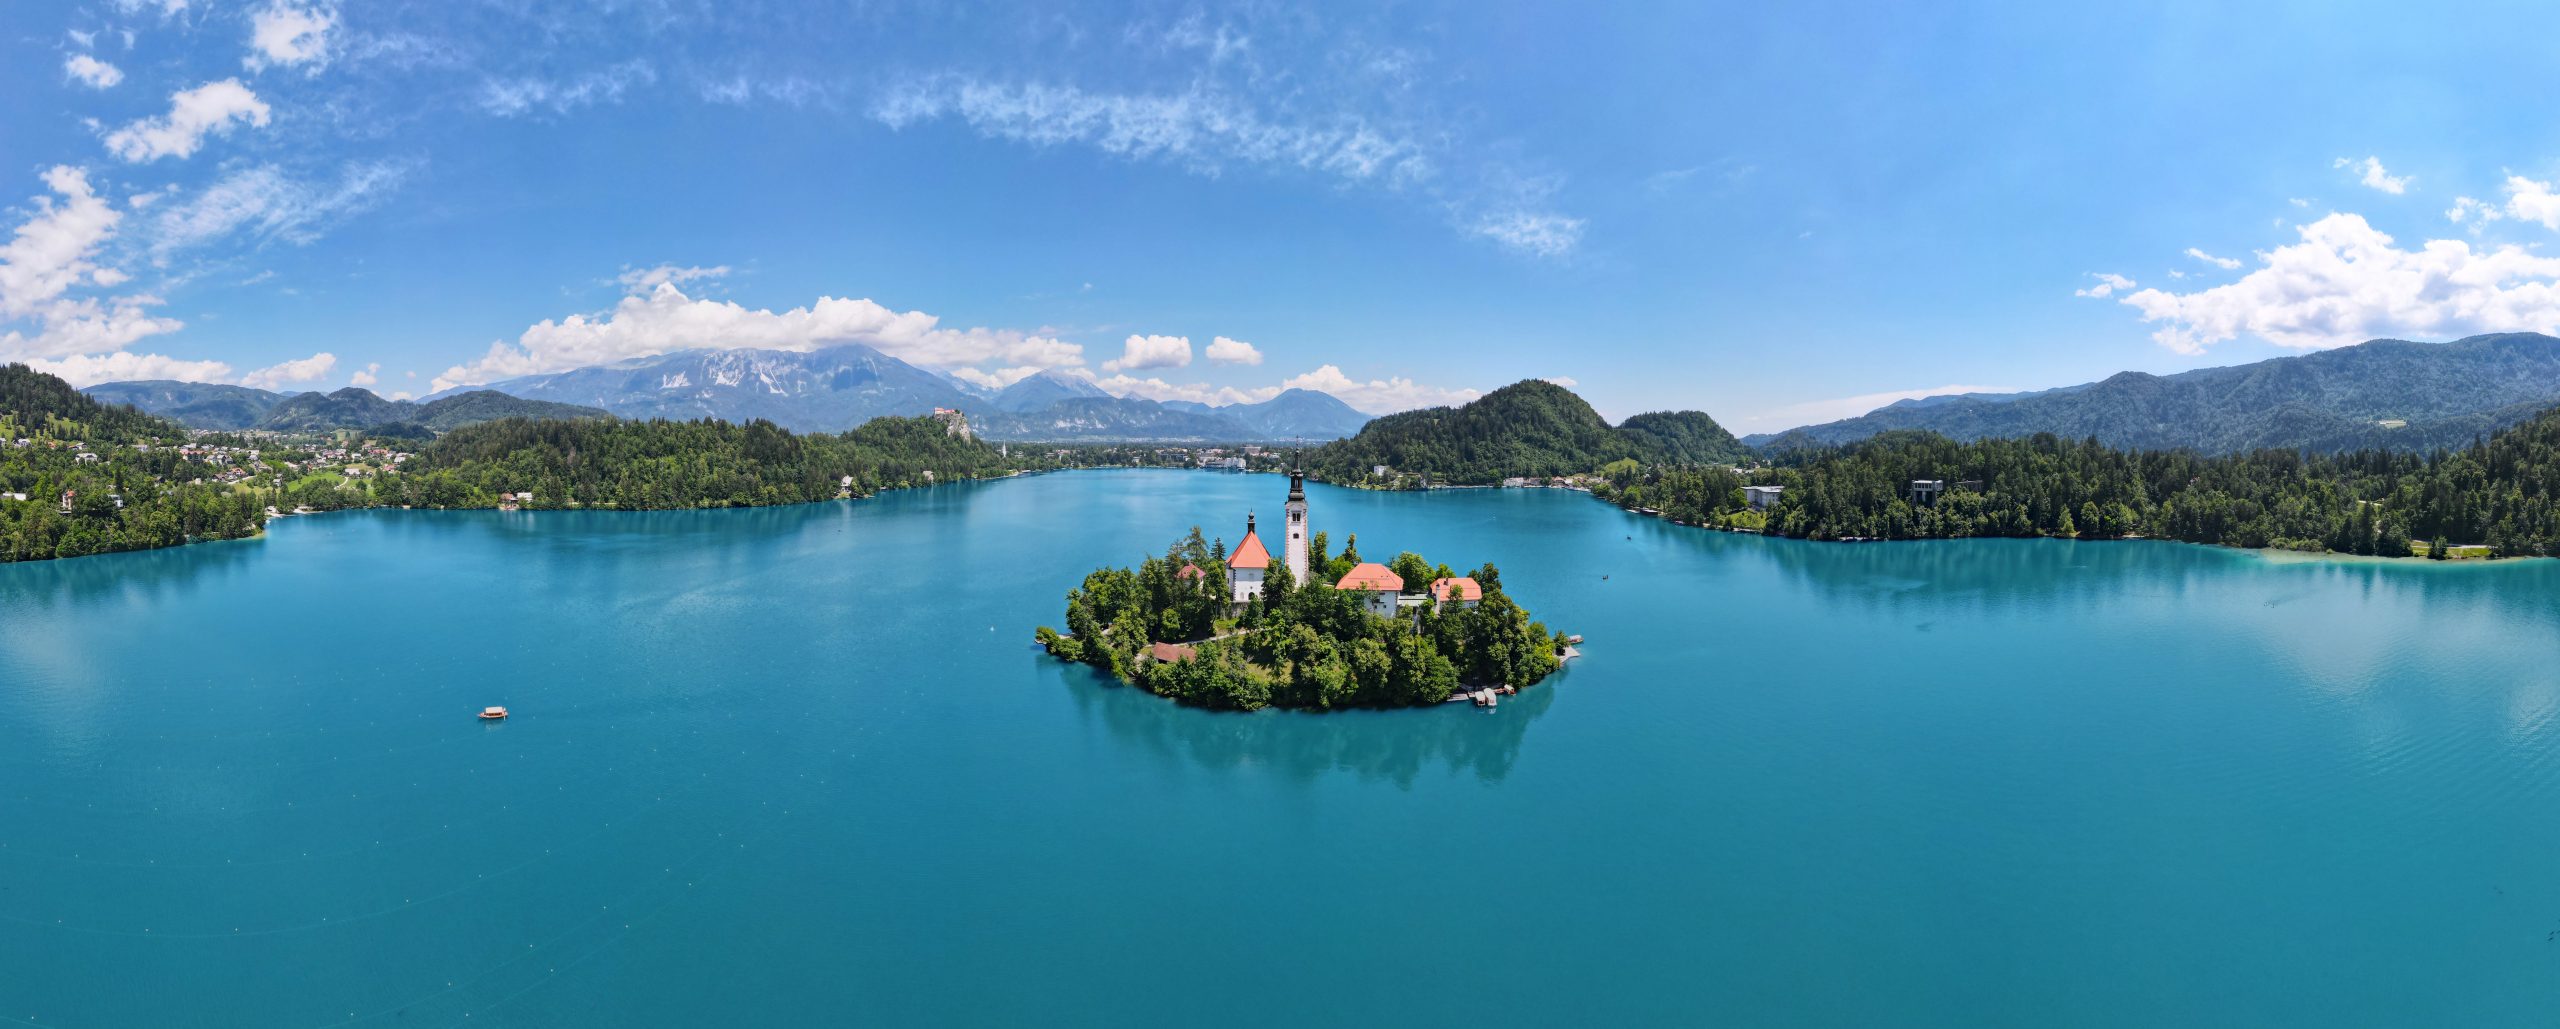 Slovenia lake bled wideshot